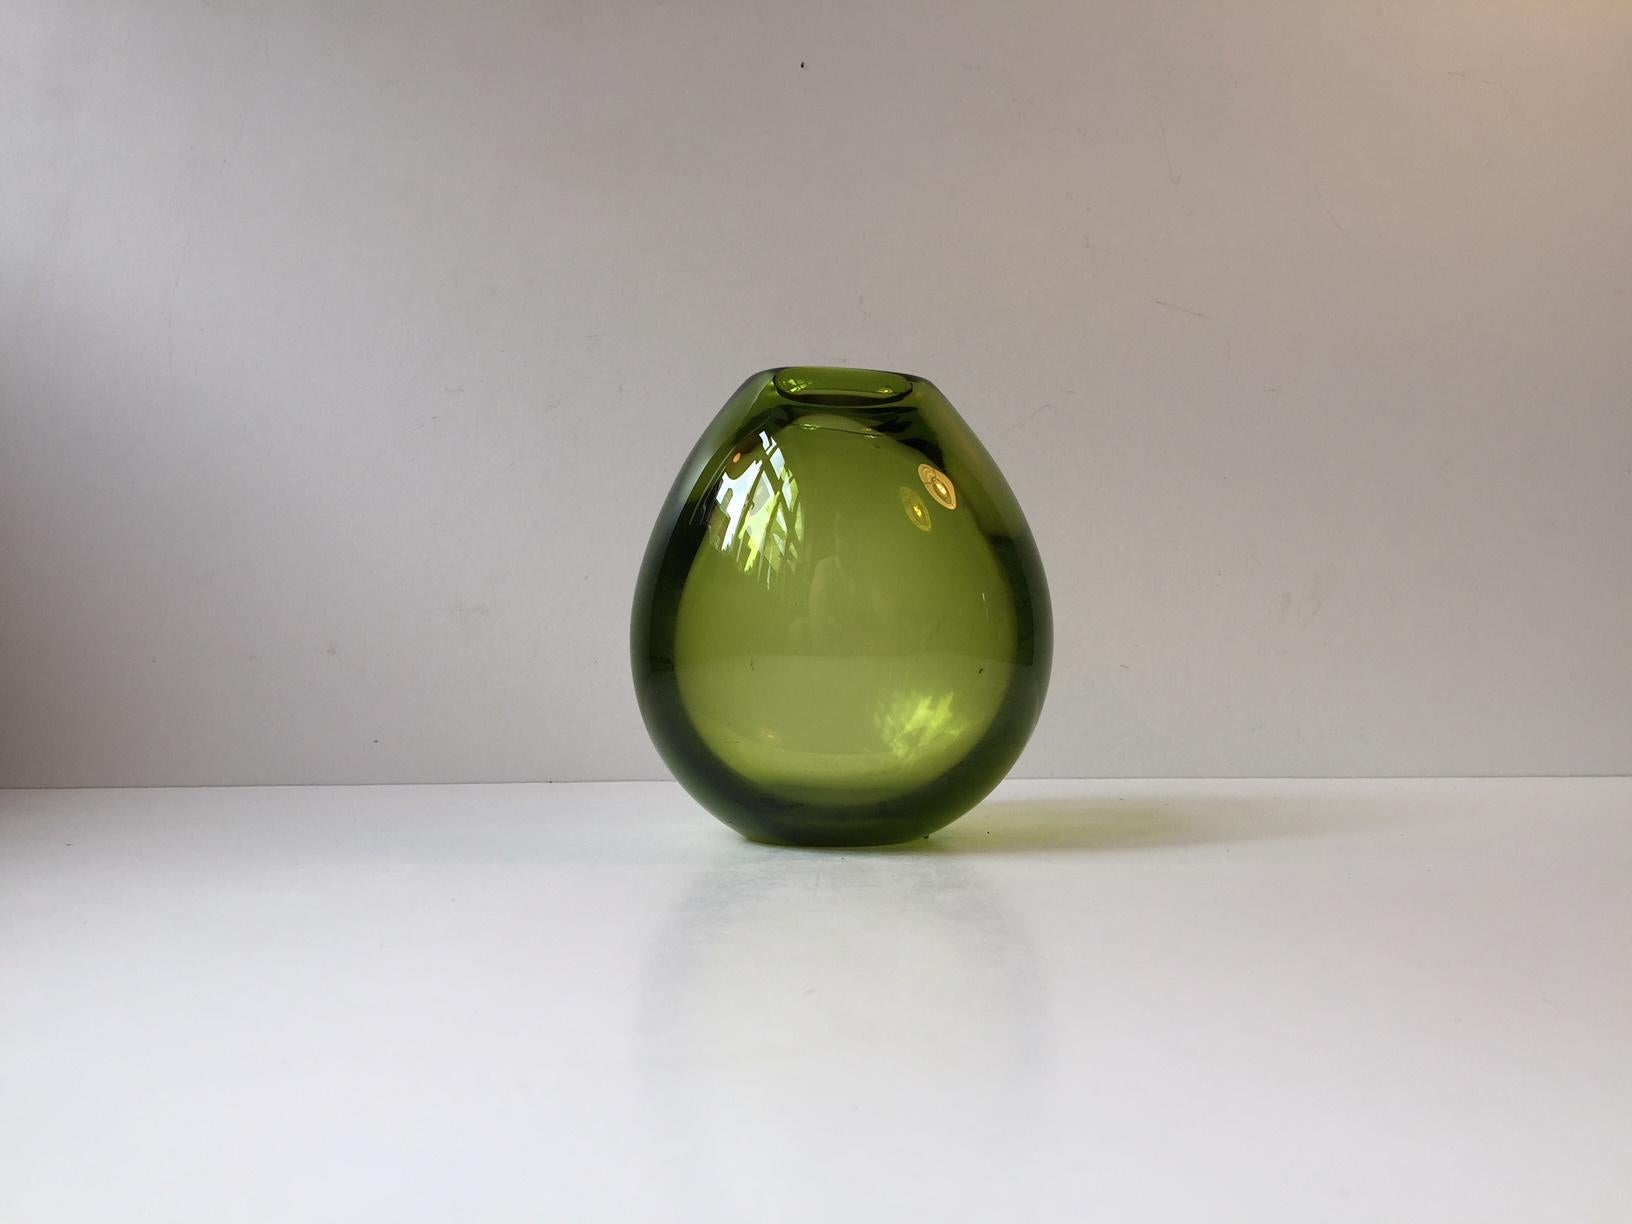 A 1960s Holmegaard Per Lutken 'May' green teardrop shaped vase, signed to base 'Holmegaard', numbered and with Per Lütken initials.